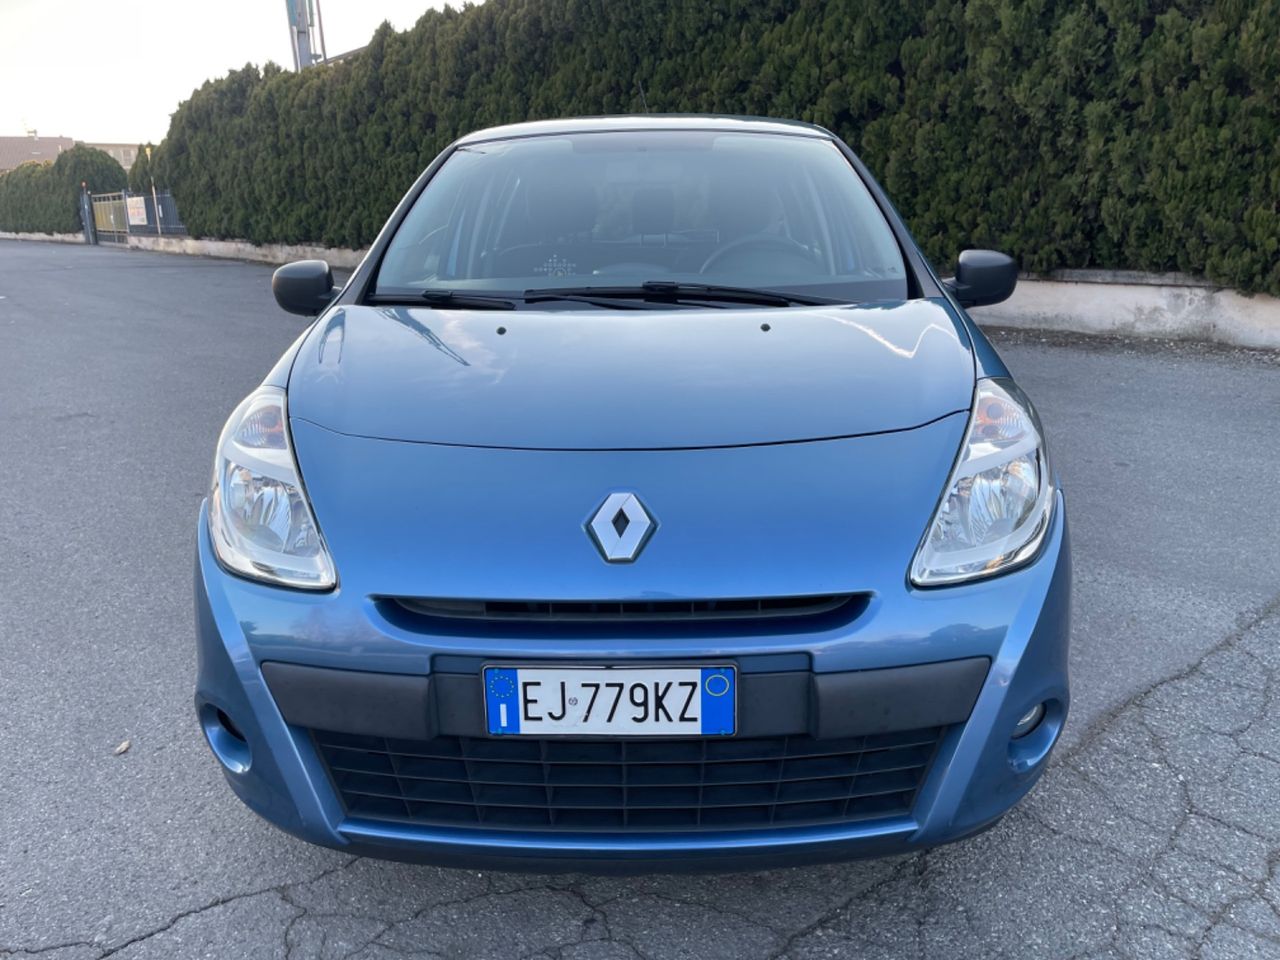 Renault Clio.1.2 benzina, euro 5